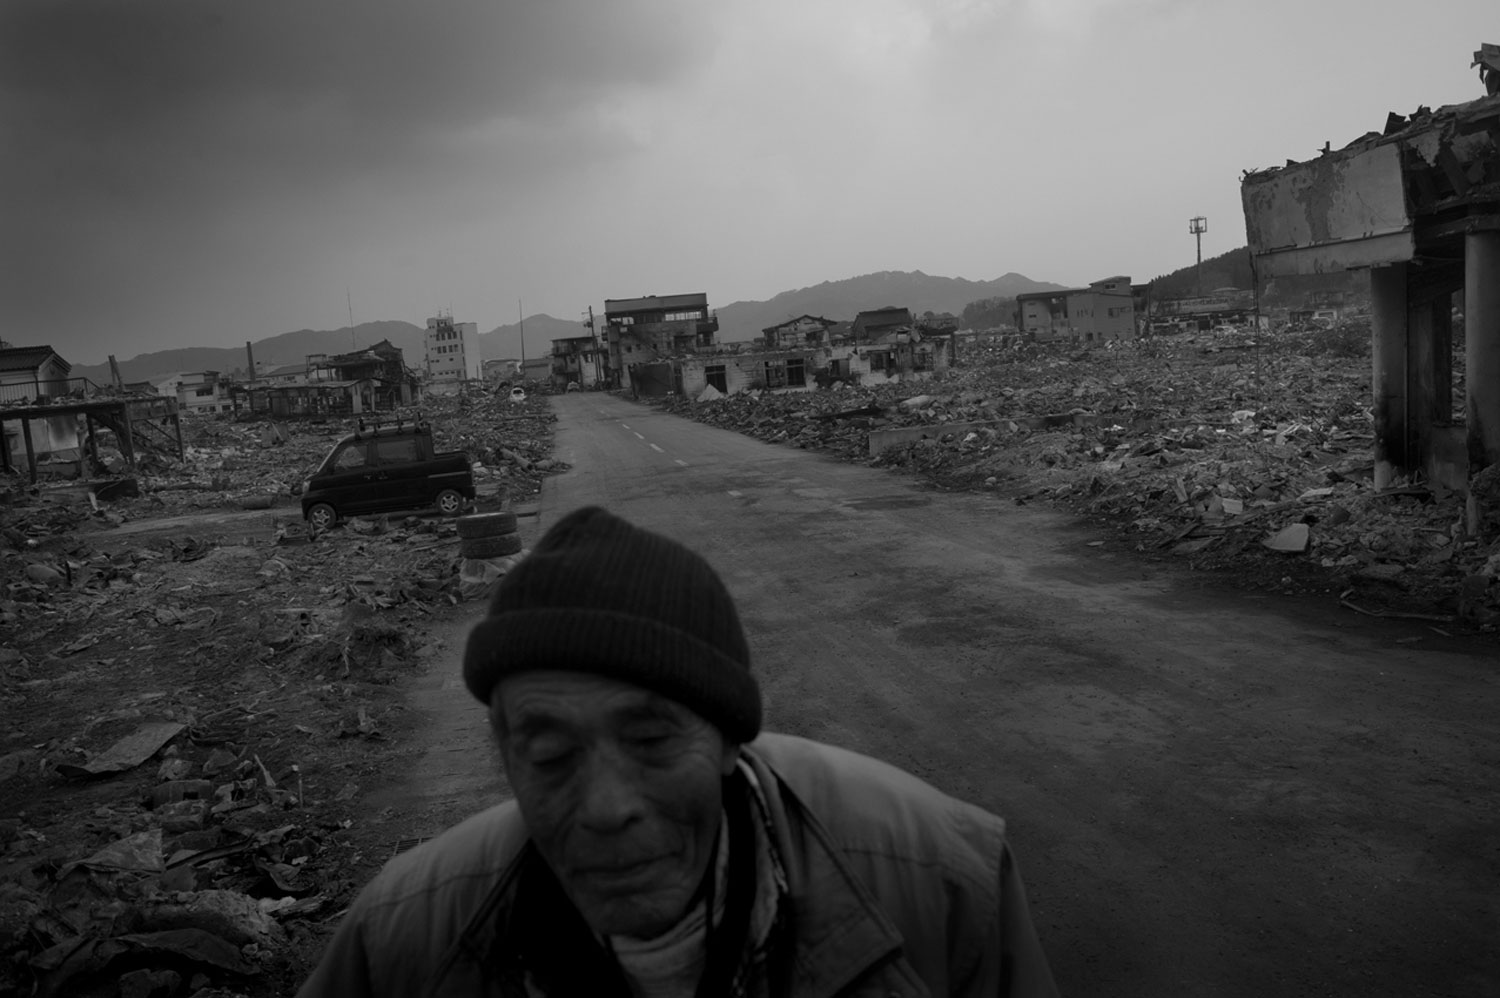 The city of Yamada after the tsunami.